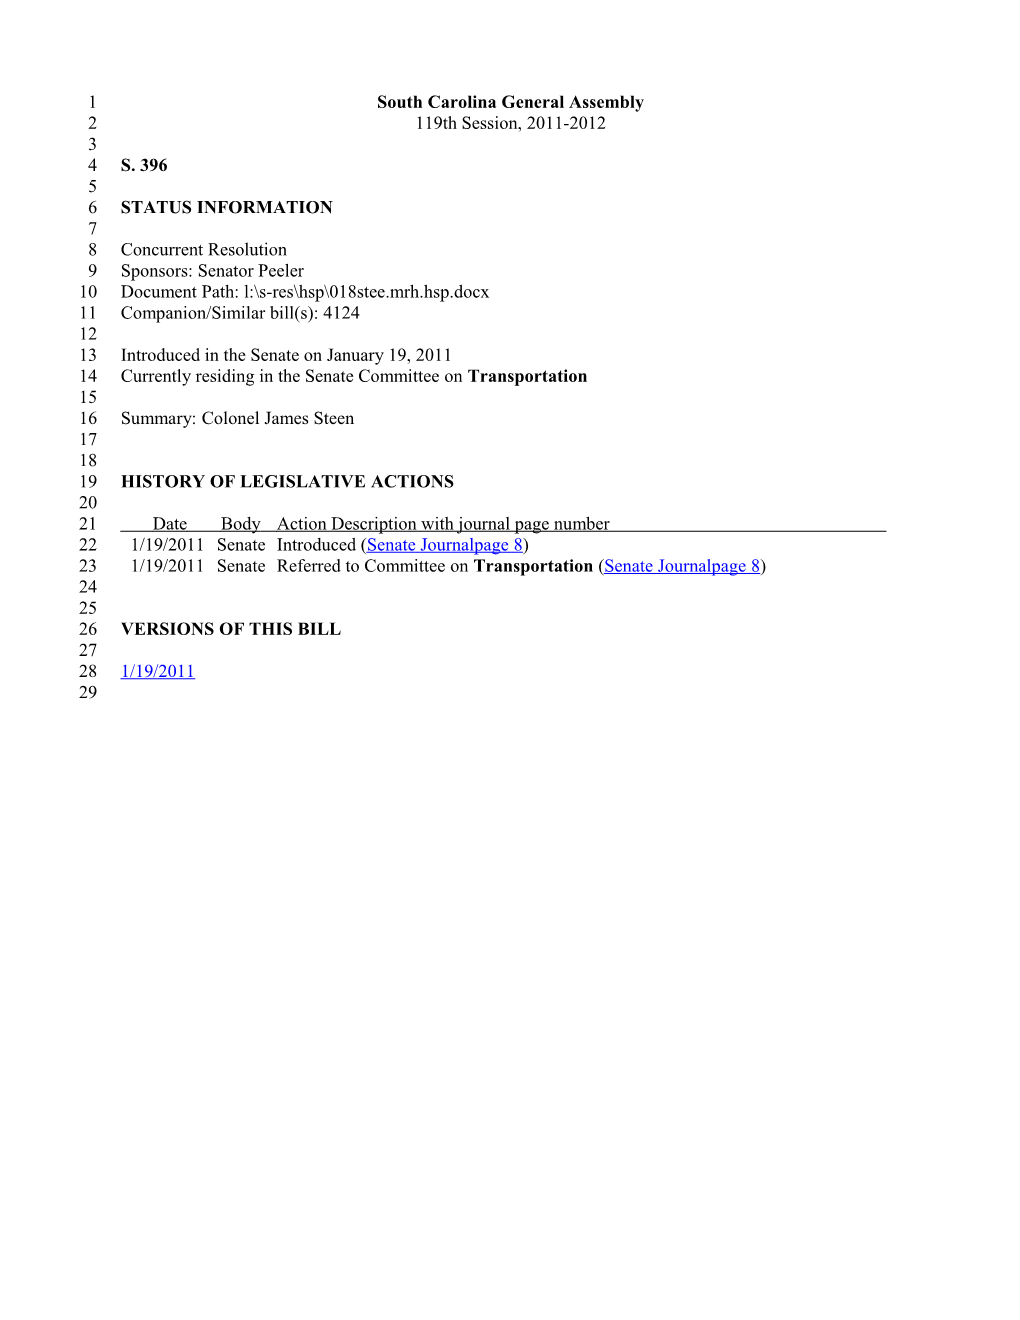 2011-2012 Bill 396: Colonel James Steen - South Carolina Legislature Online